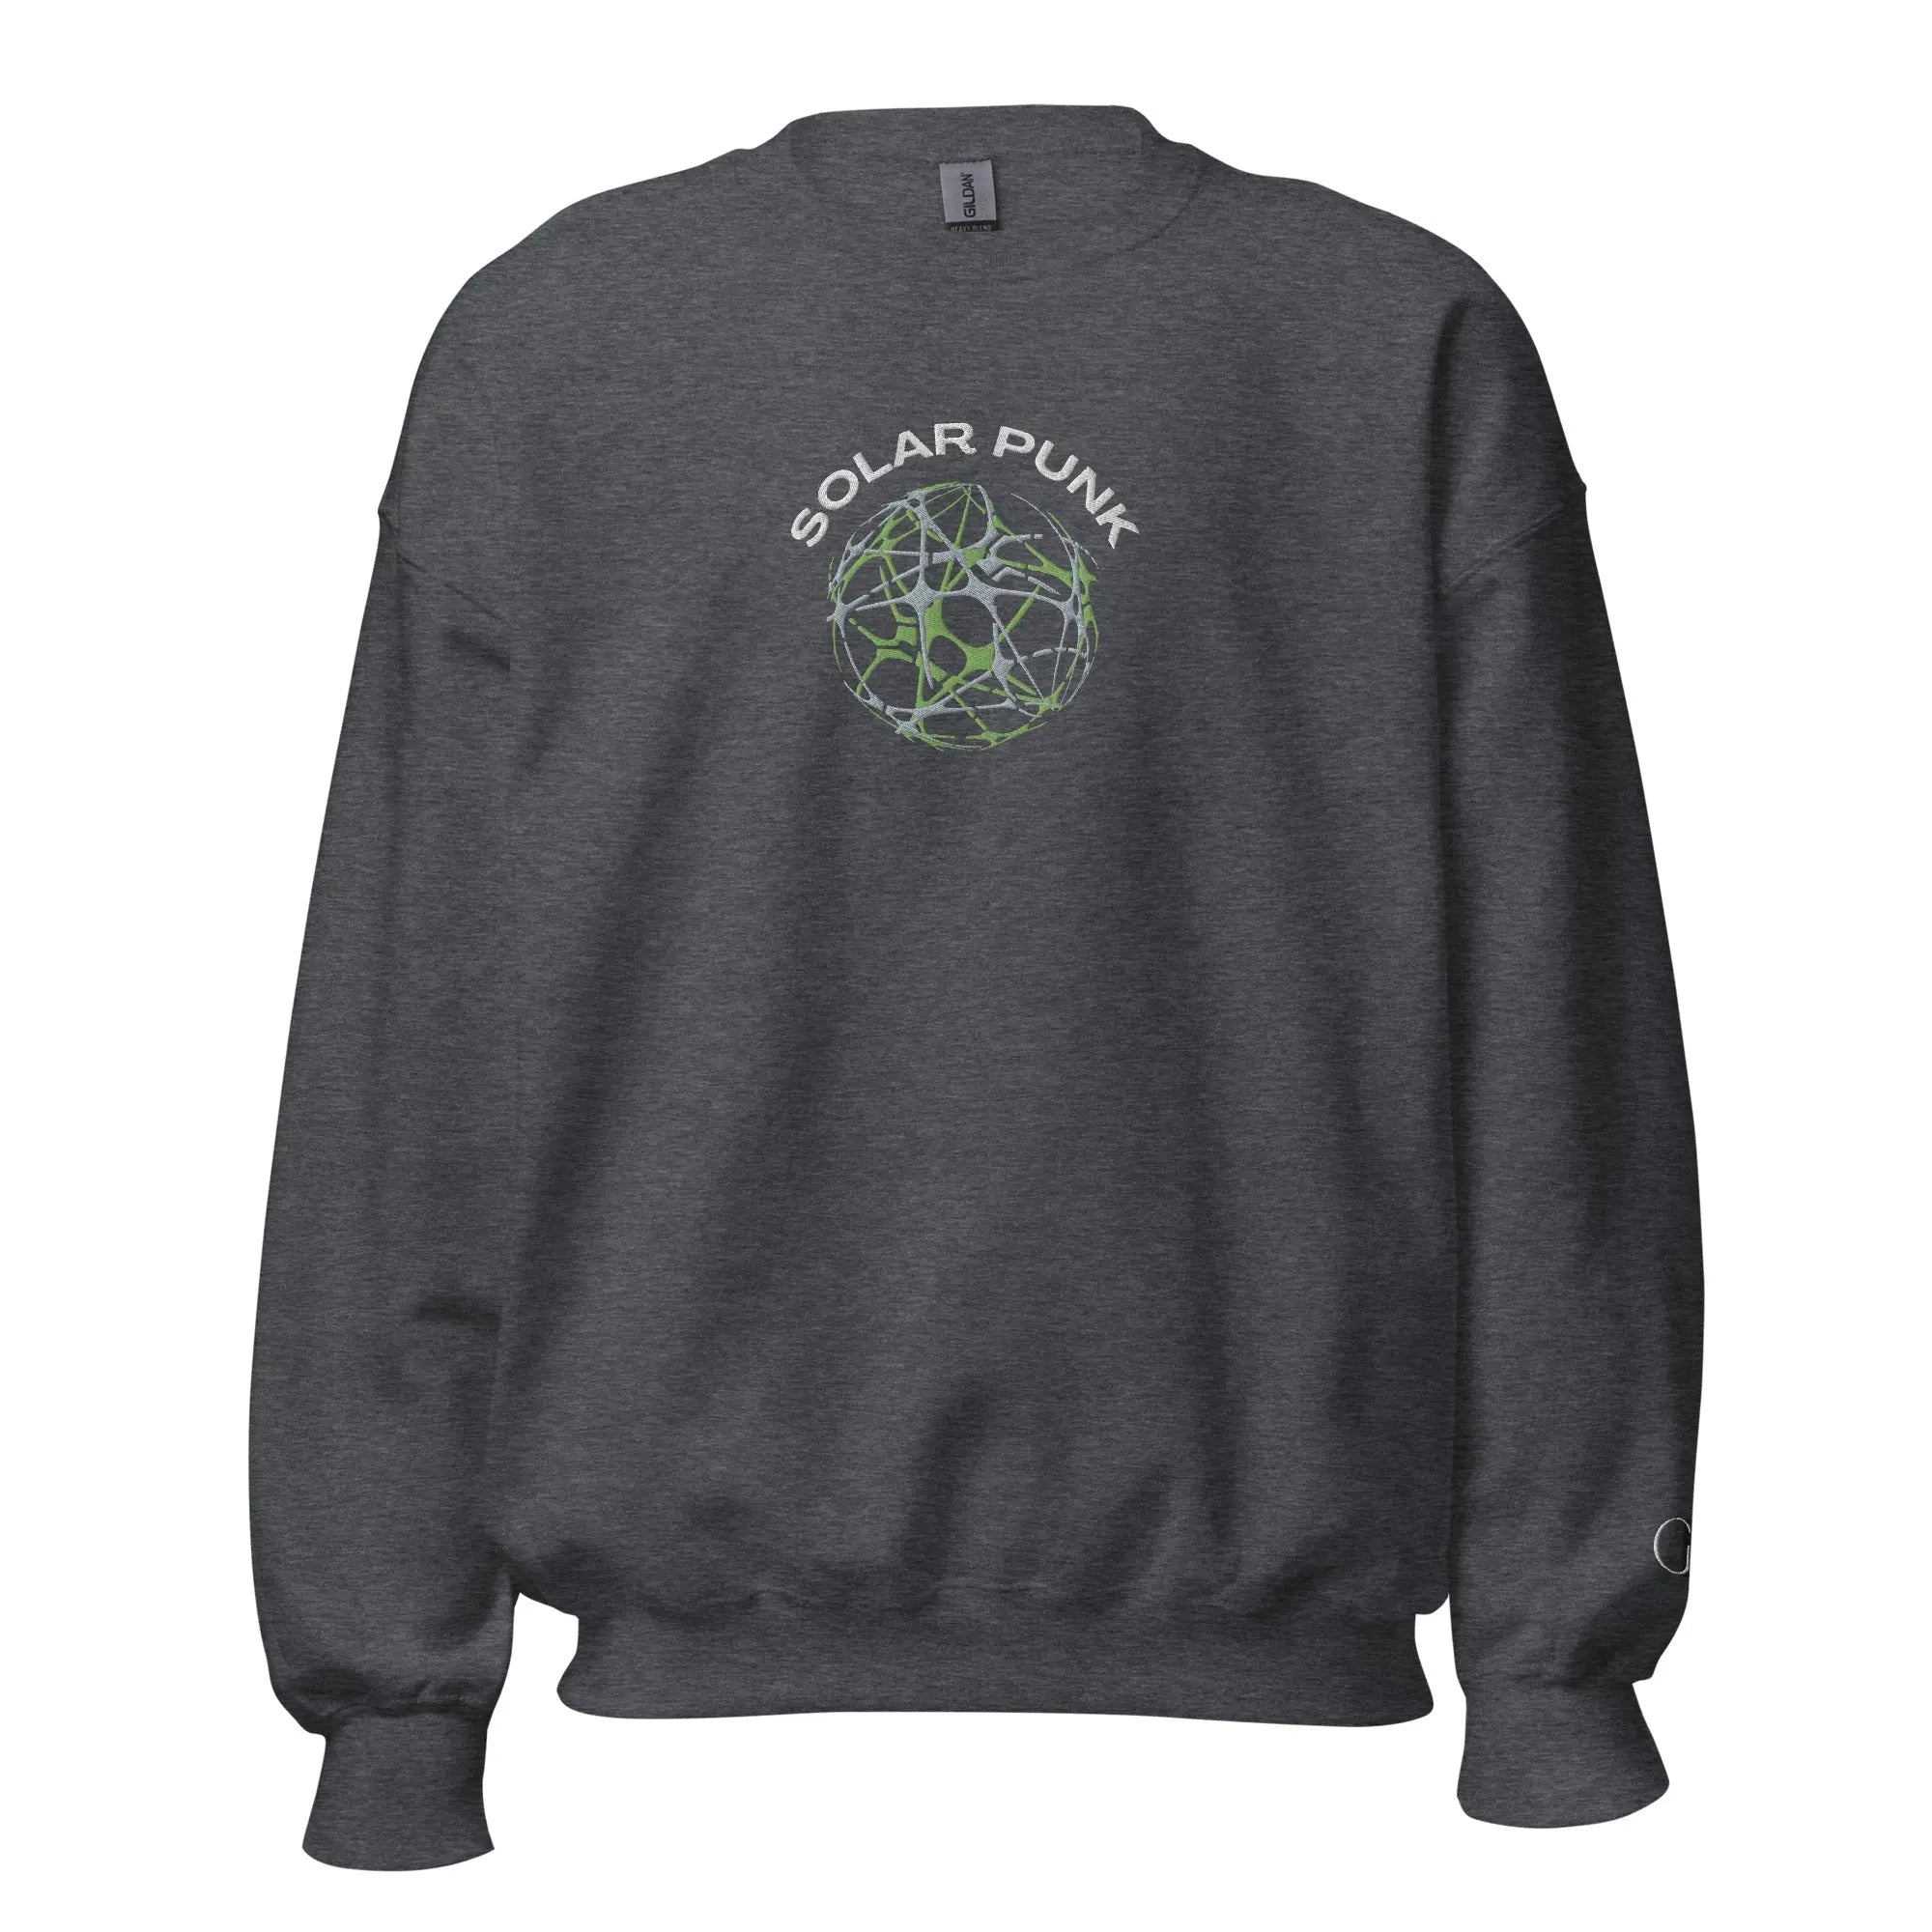 Solar Punk Movement | Embroidered Sweatshirt GeorgeKenny Design